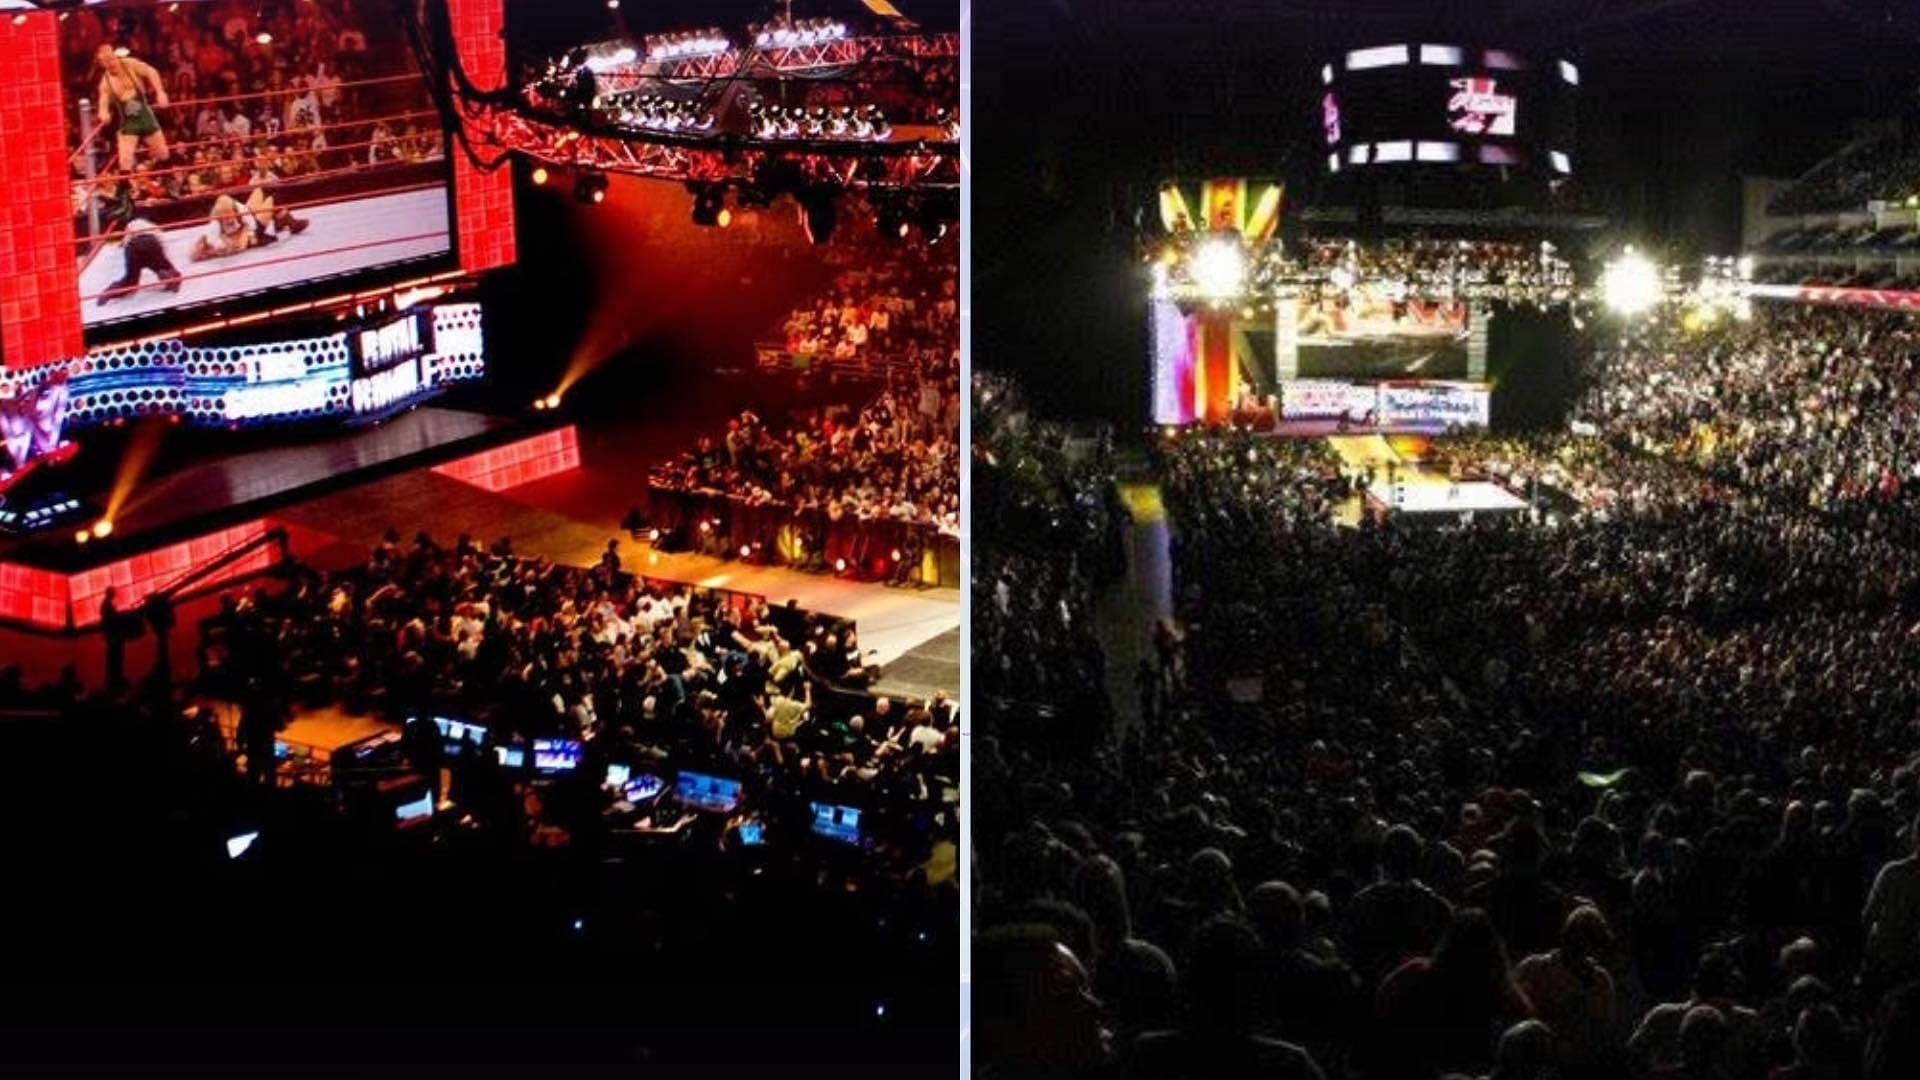 WWE arena